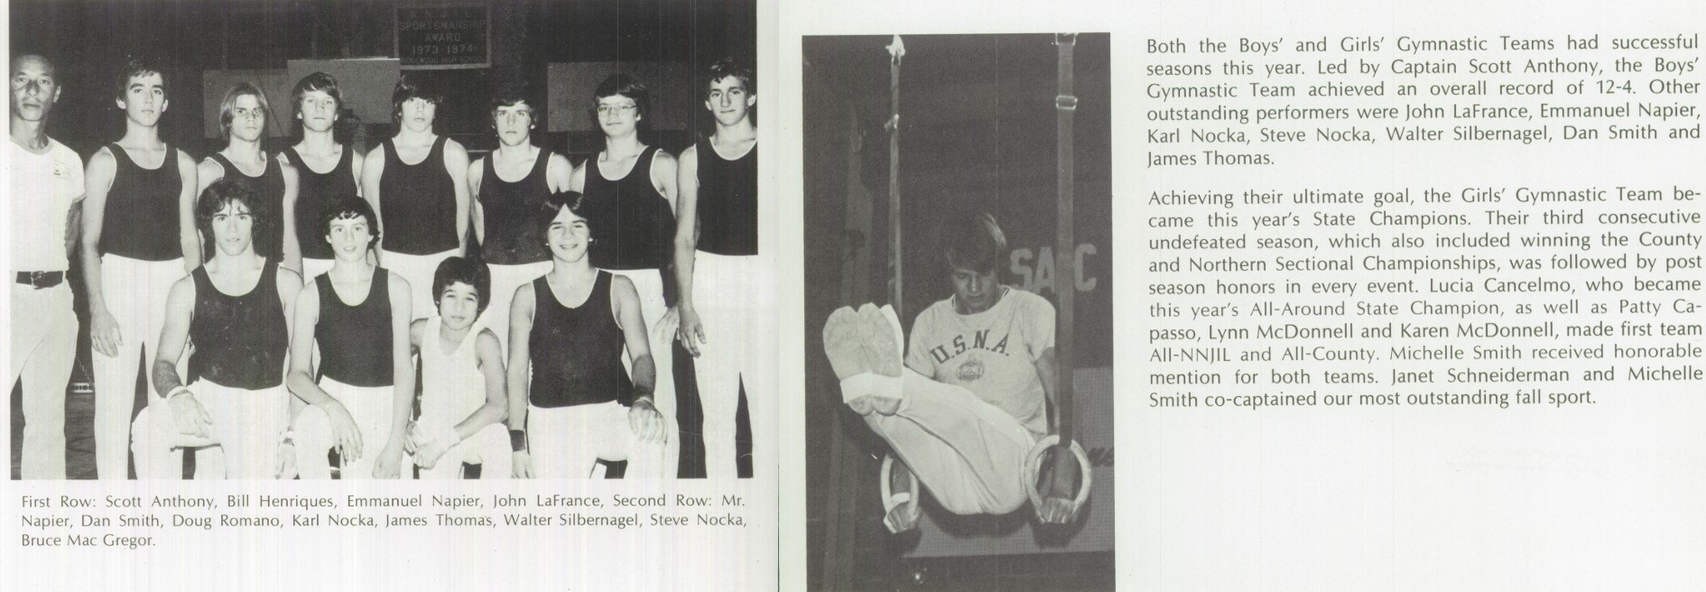 1979 Boys’ Gymnastics Team